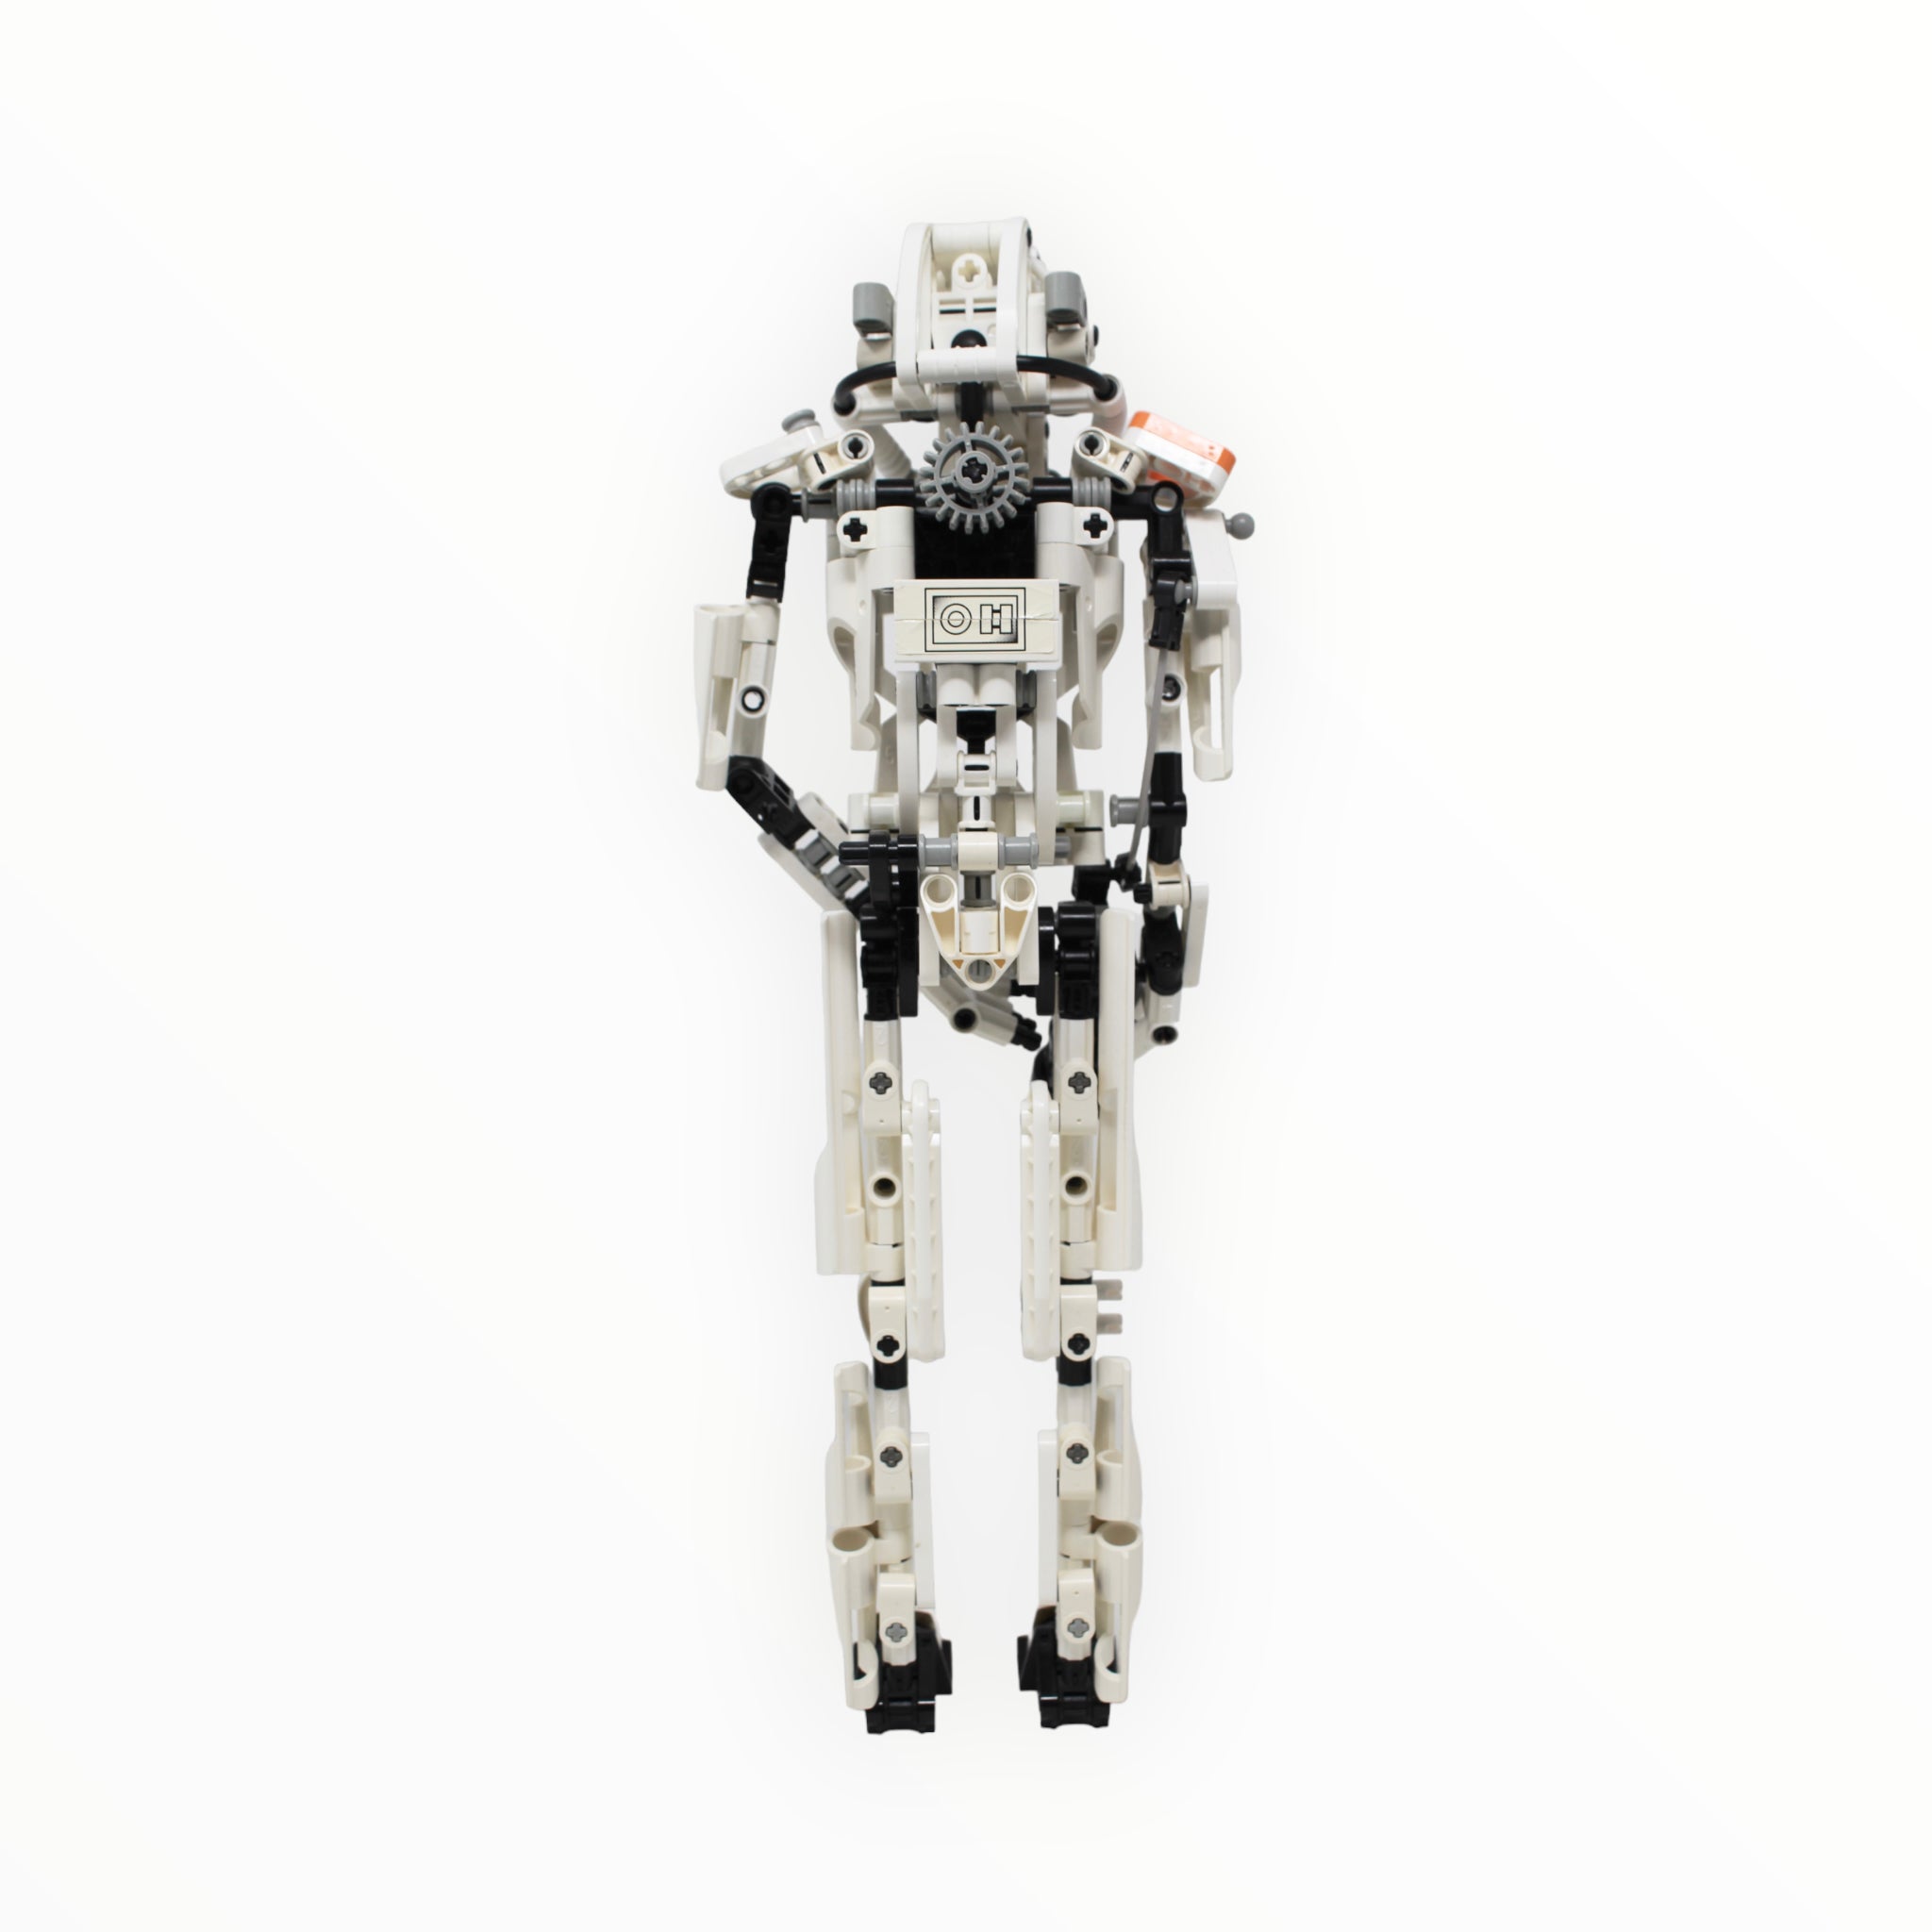 Lego Star Wars Technic Stormtrooper (8008) - Brand New, Sealed Retired